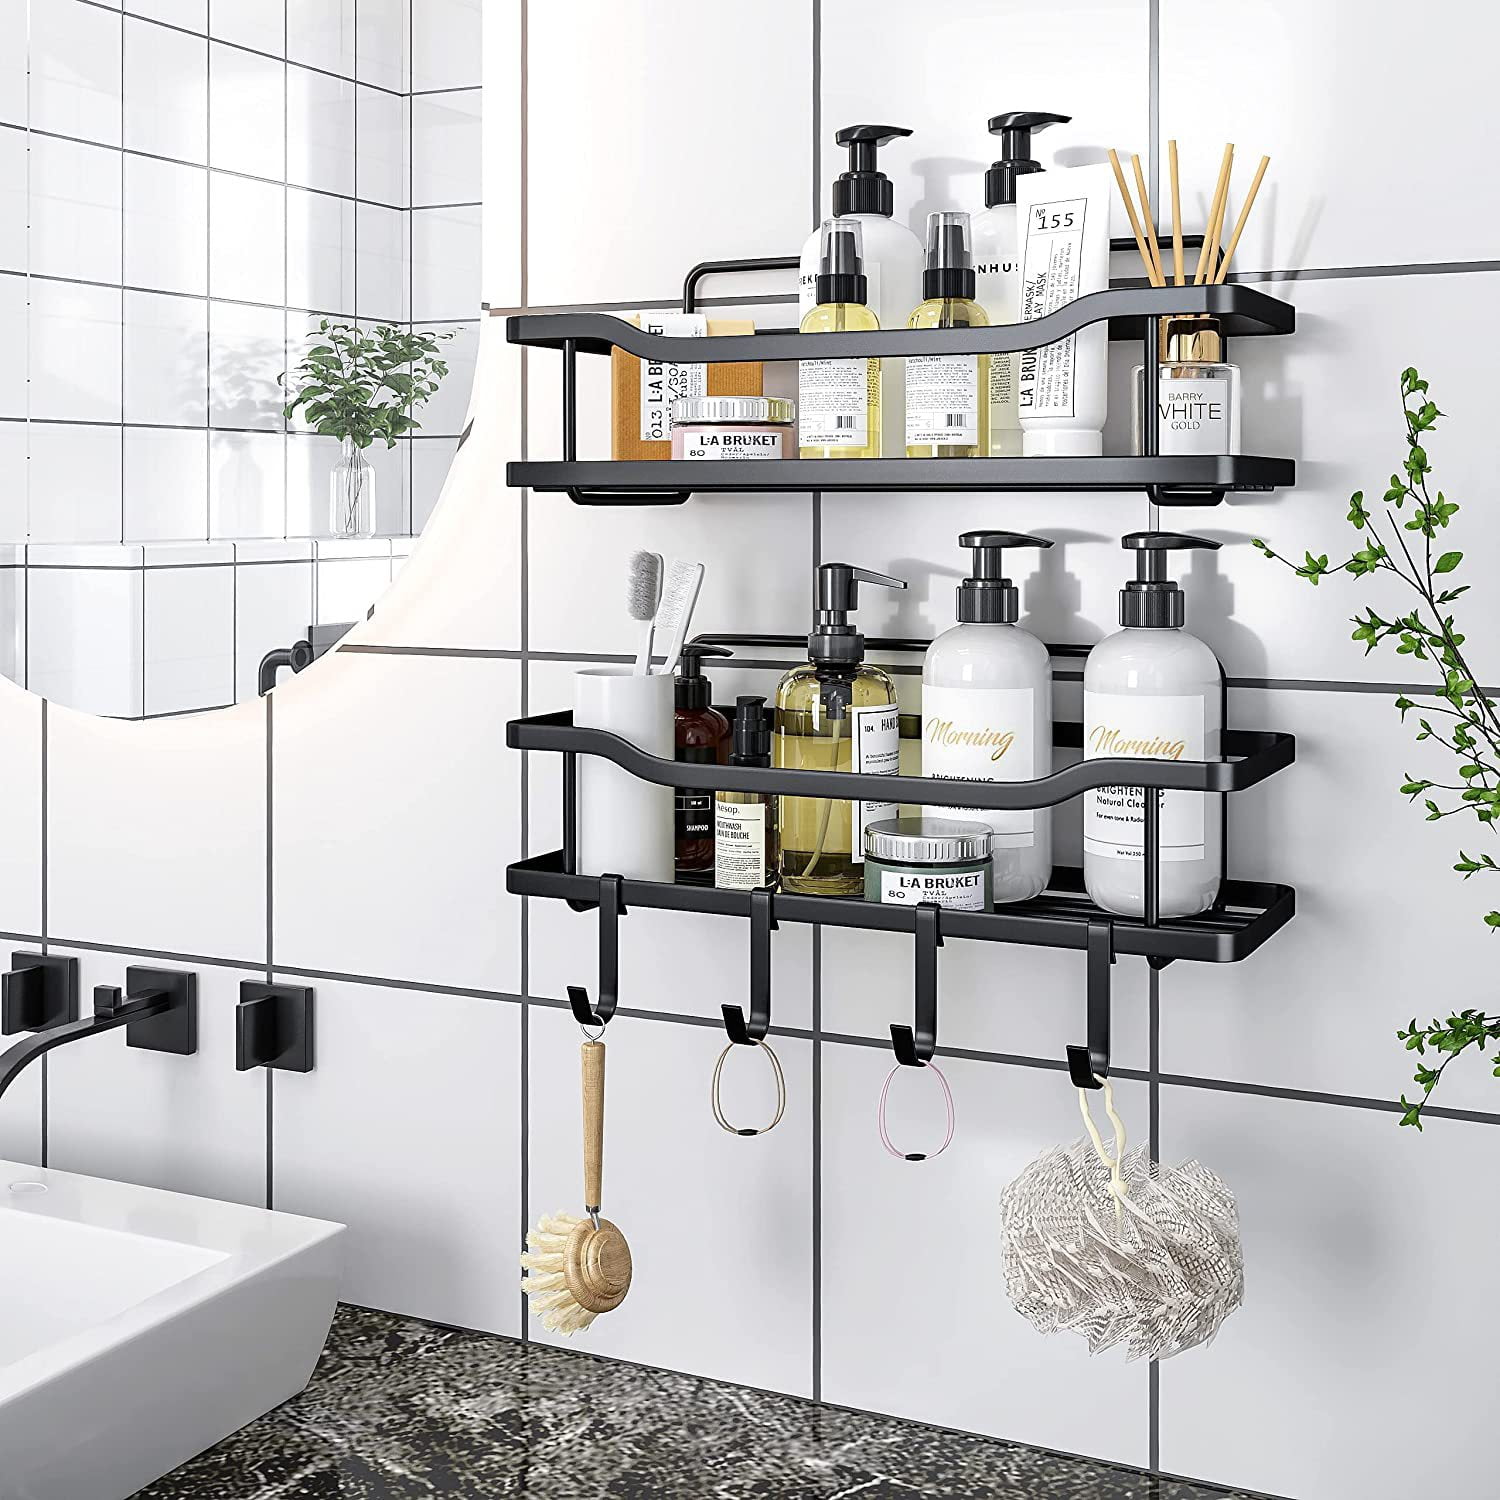 MSEUS Shower Caddy, Bathroom Shower Organizer [5-Pack], Self Adhesive Shower Shelves, Shower Shelf for Inside Shower Rack, Stainless Steel Rustproof